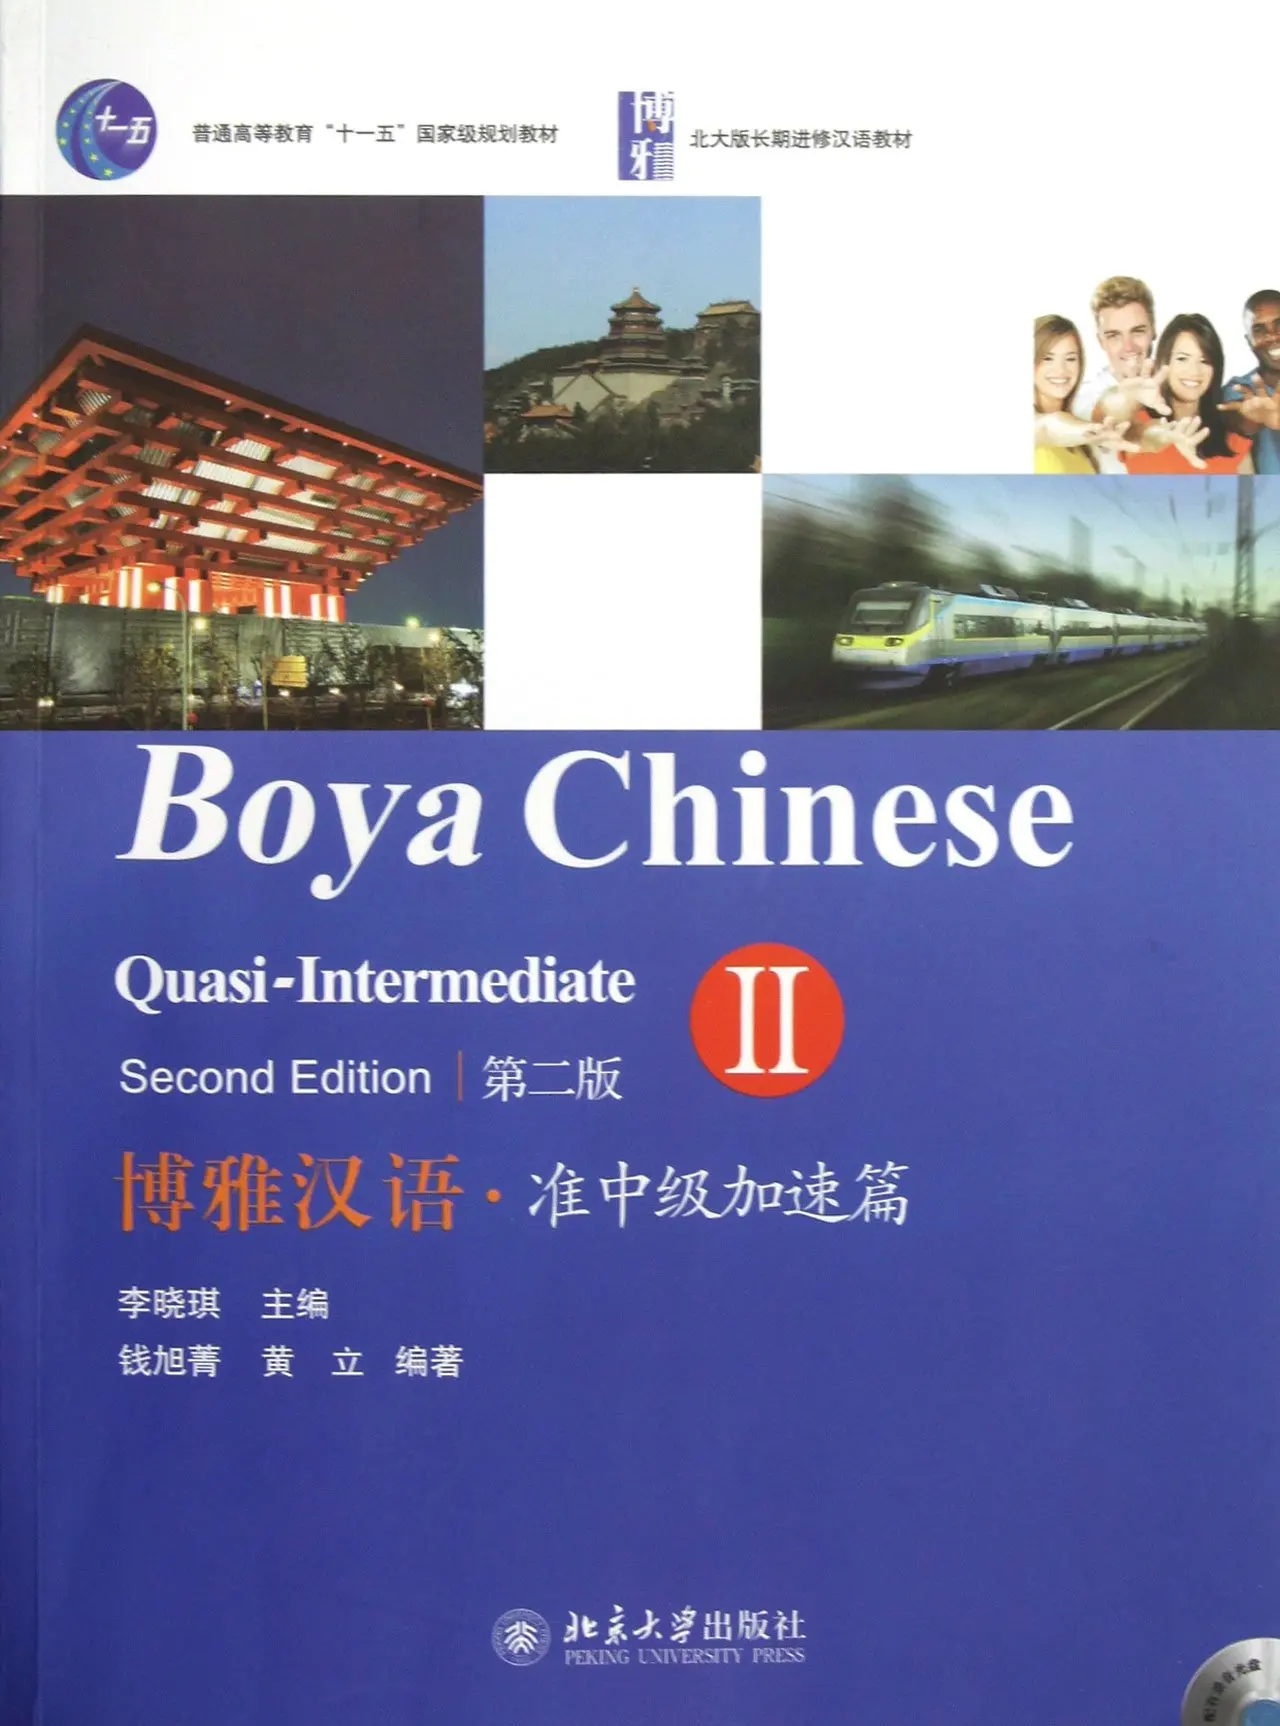 

Boya Chinese: Quasi-Intermediate 2 (2nd Ed.) (w/MP3) by Li Xiao Qi (Author)